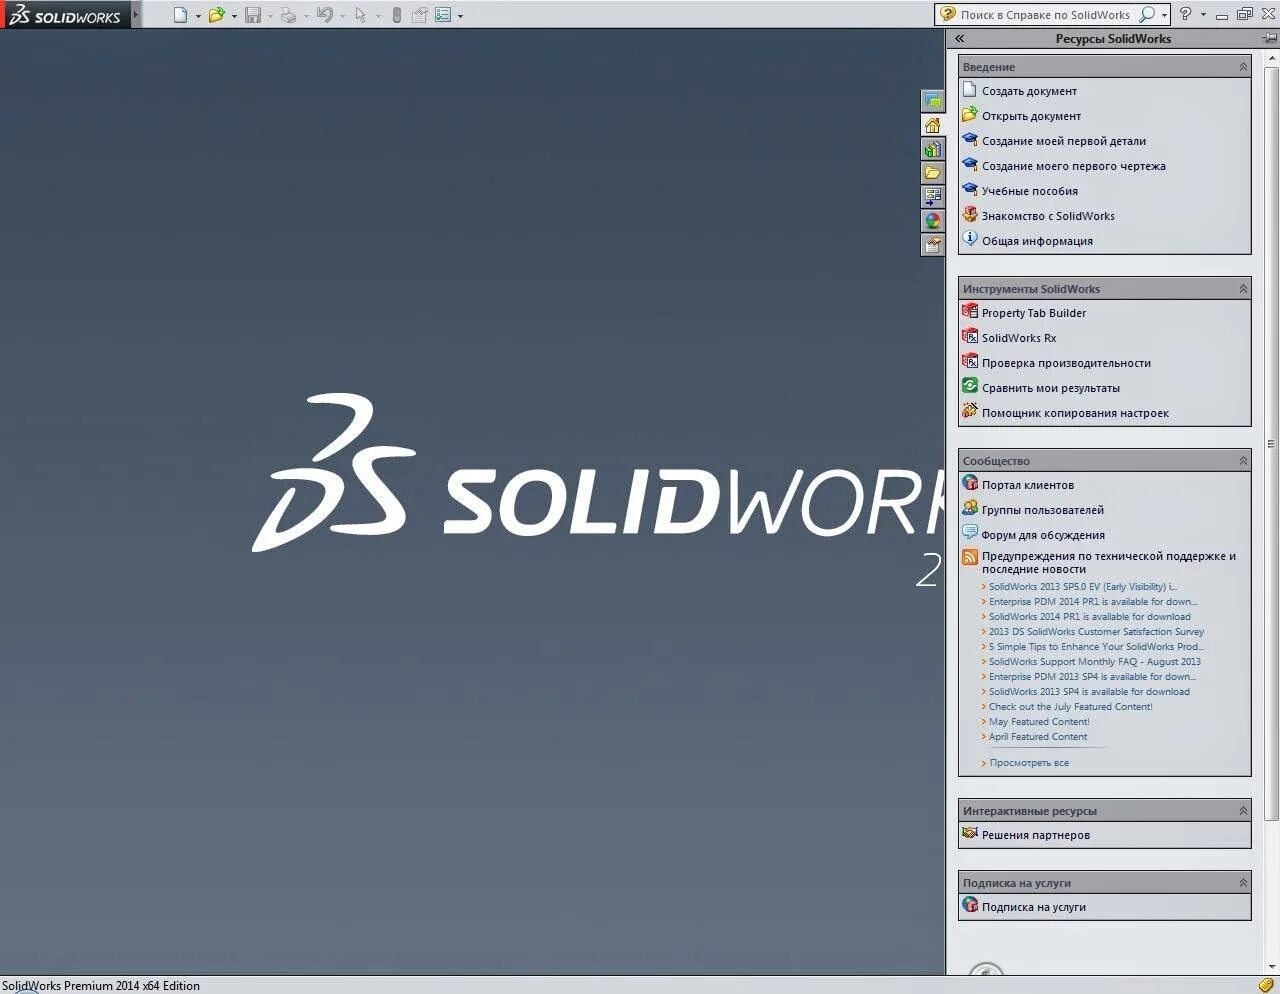 Solidworks 2015. Solidworks Premium Edition 2014 SP5.0. Solidworks Premium Edition 2016. Solidworks SP 5.